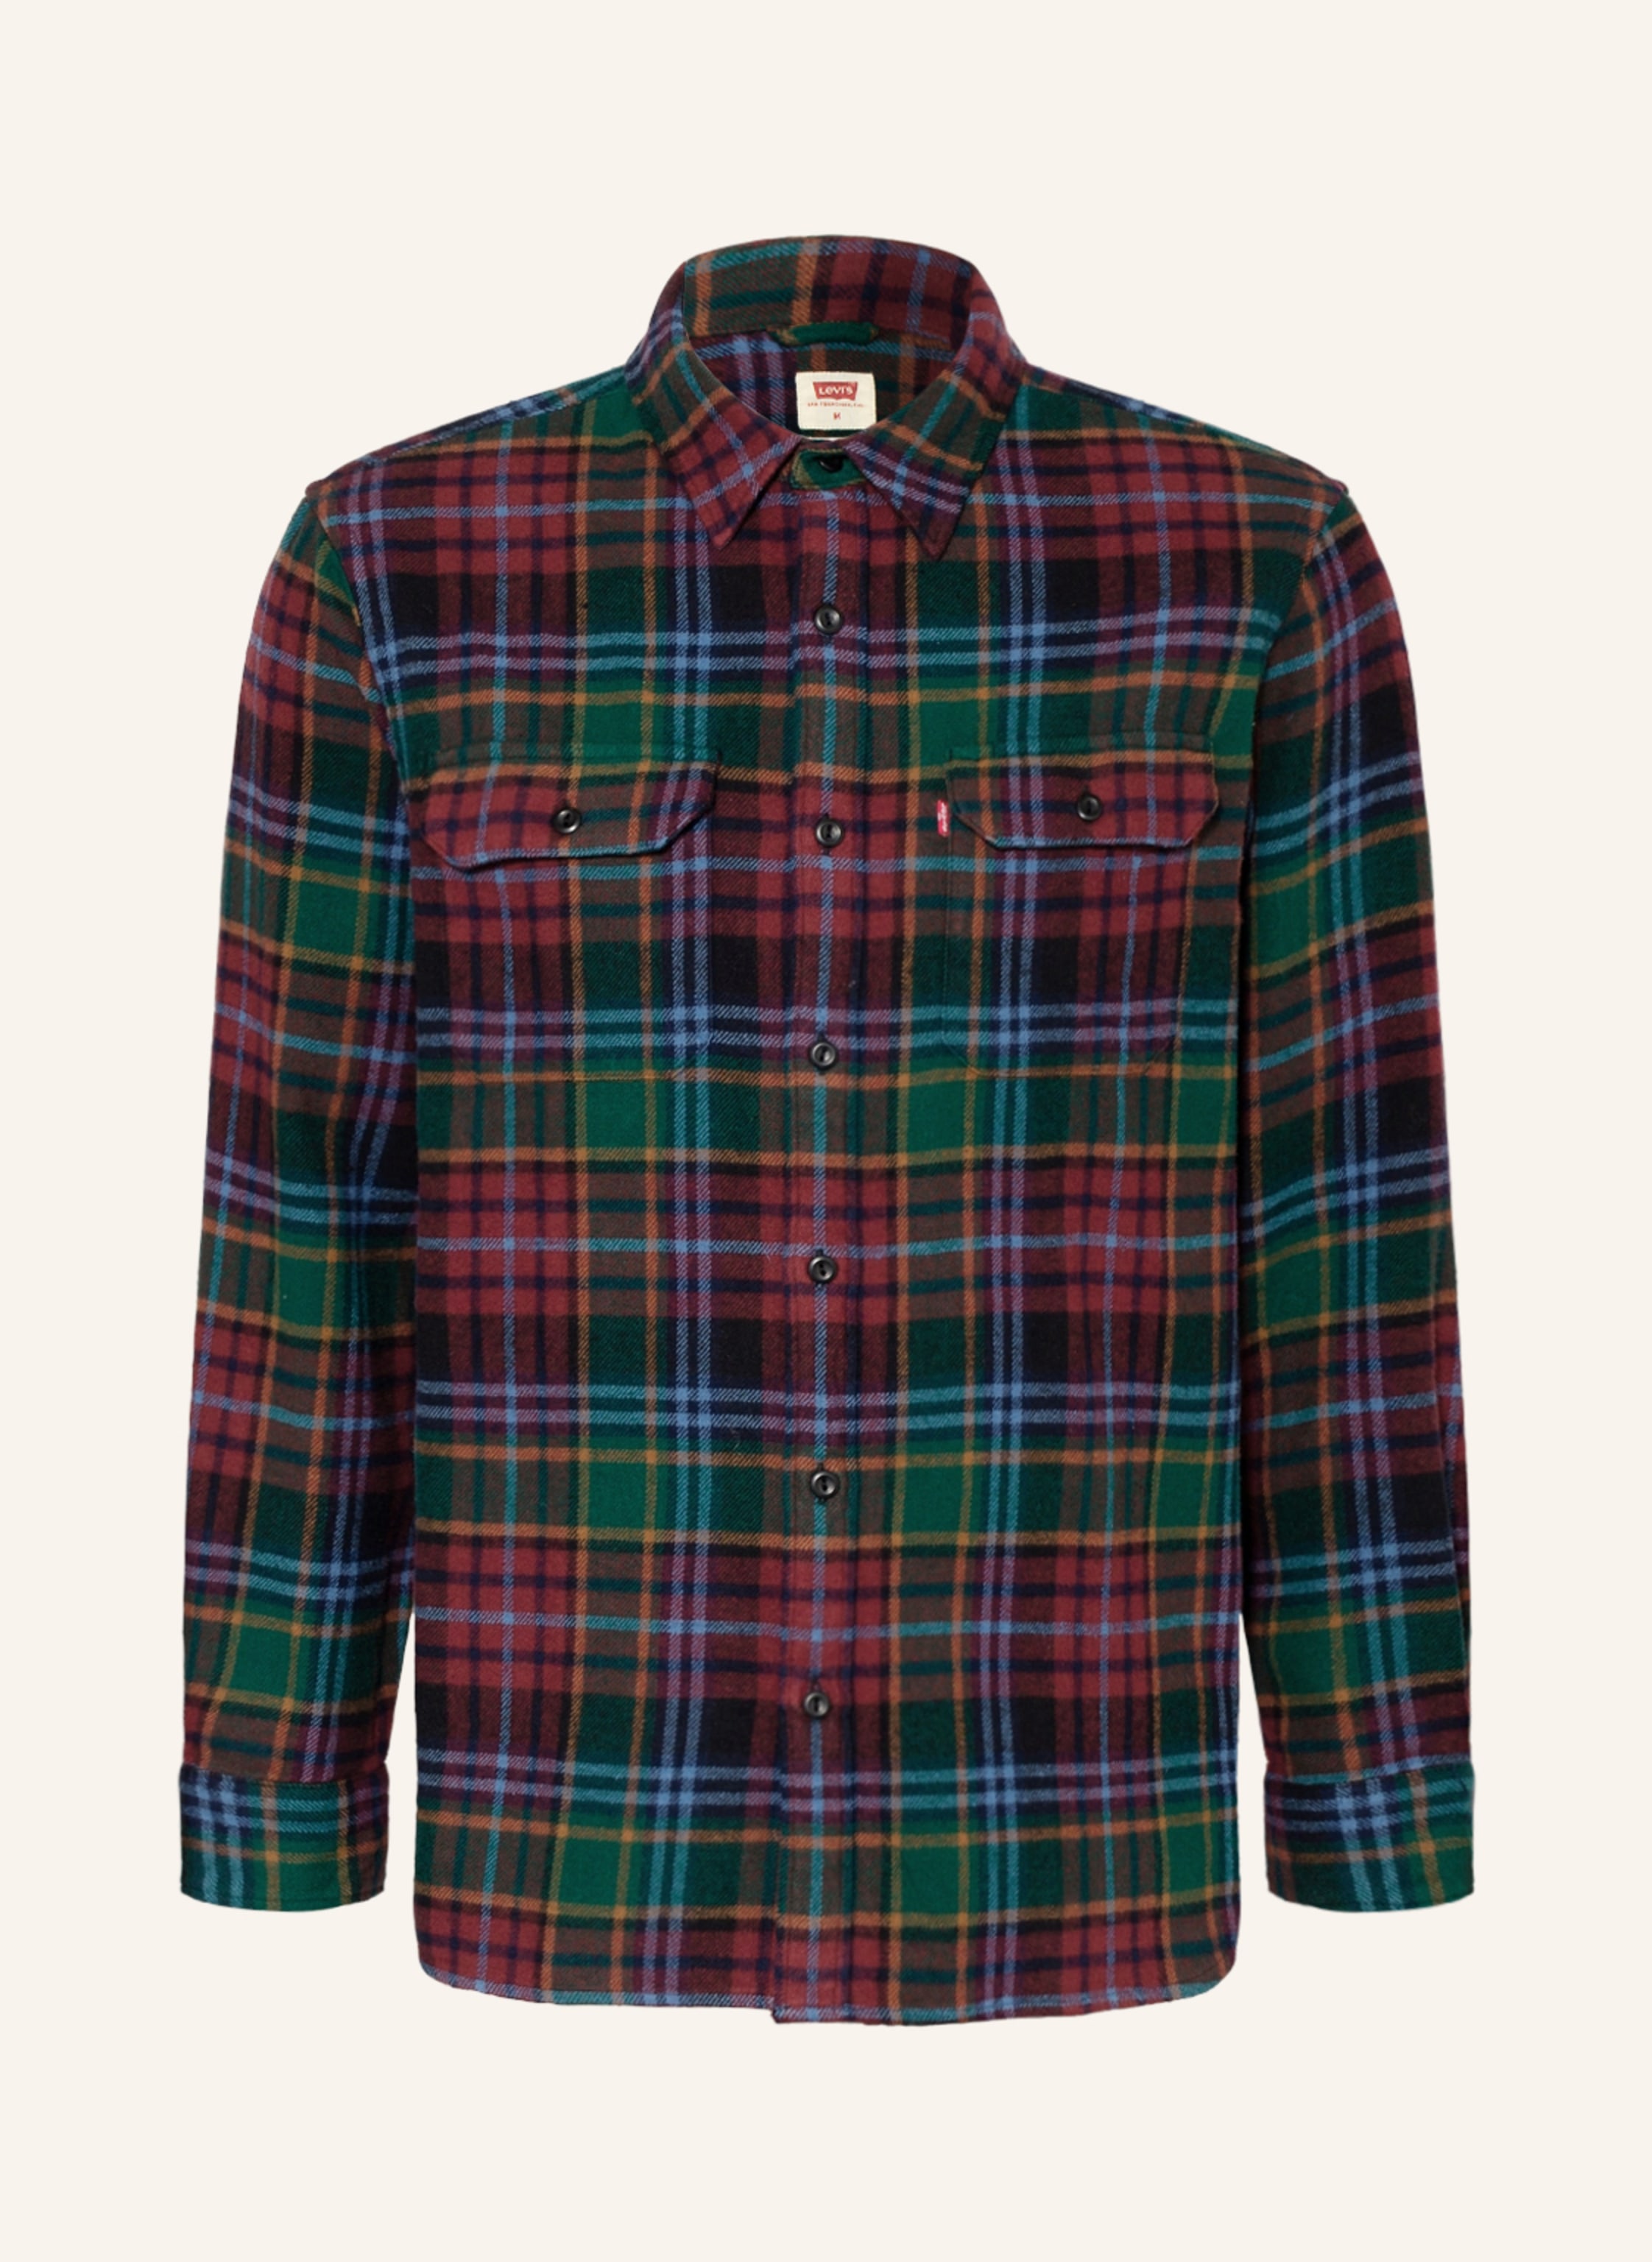 Levi's® Flannel shirt JACKSON WORKER relaxed fit in dark red/ green/ dark  blue | Breuninger